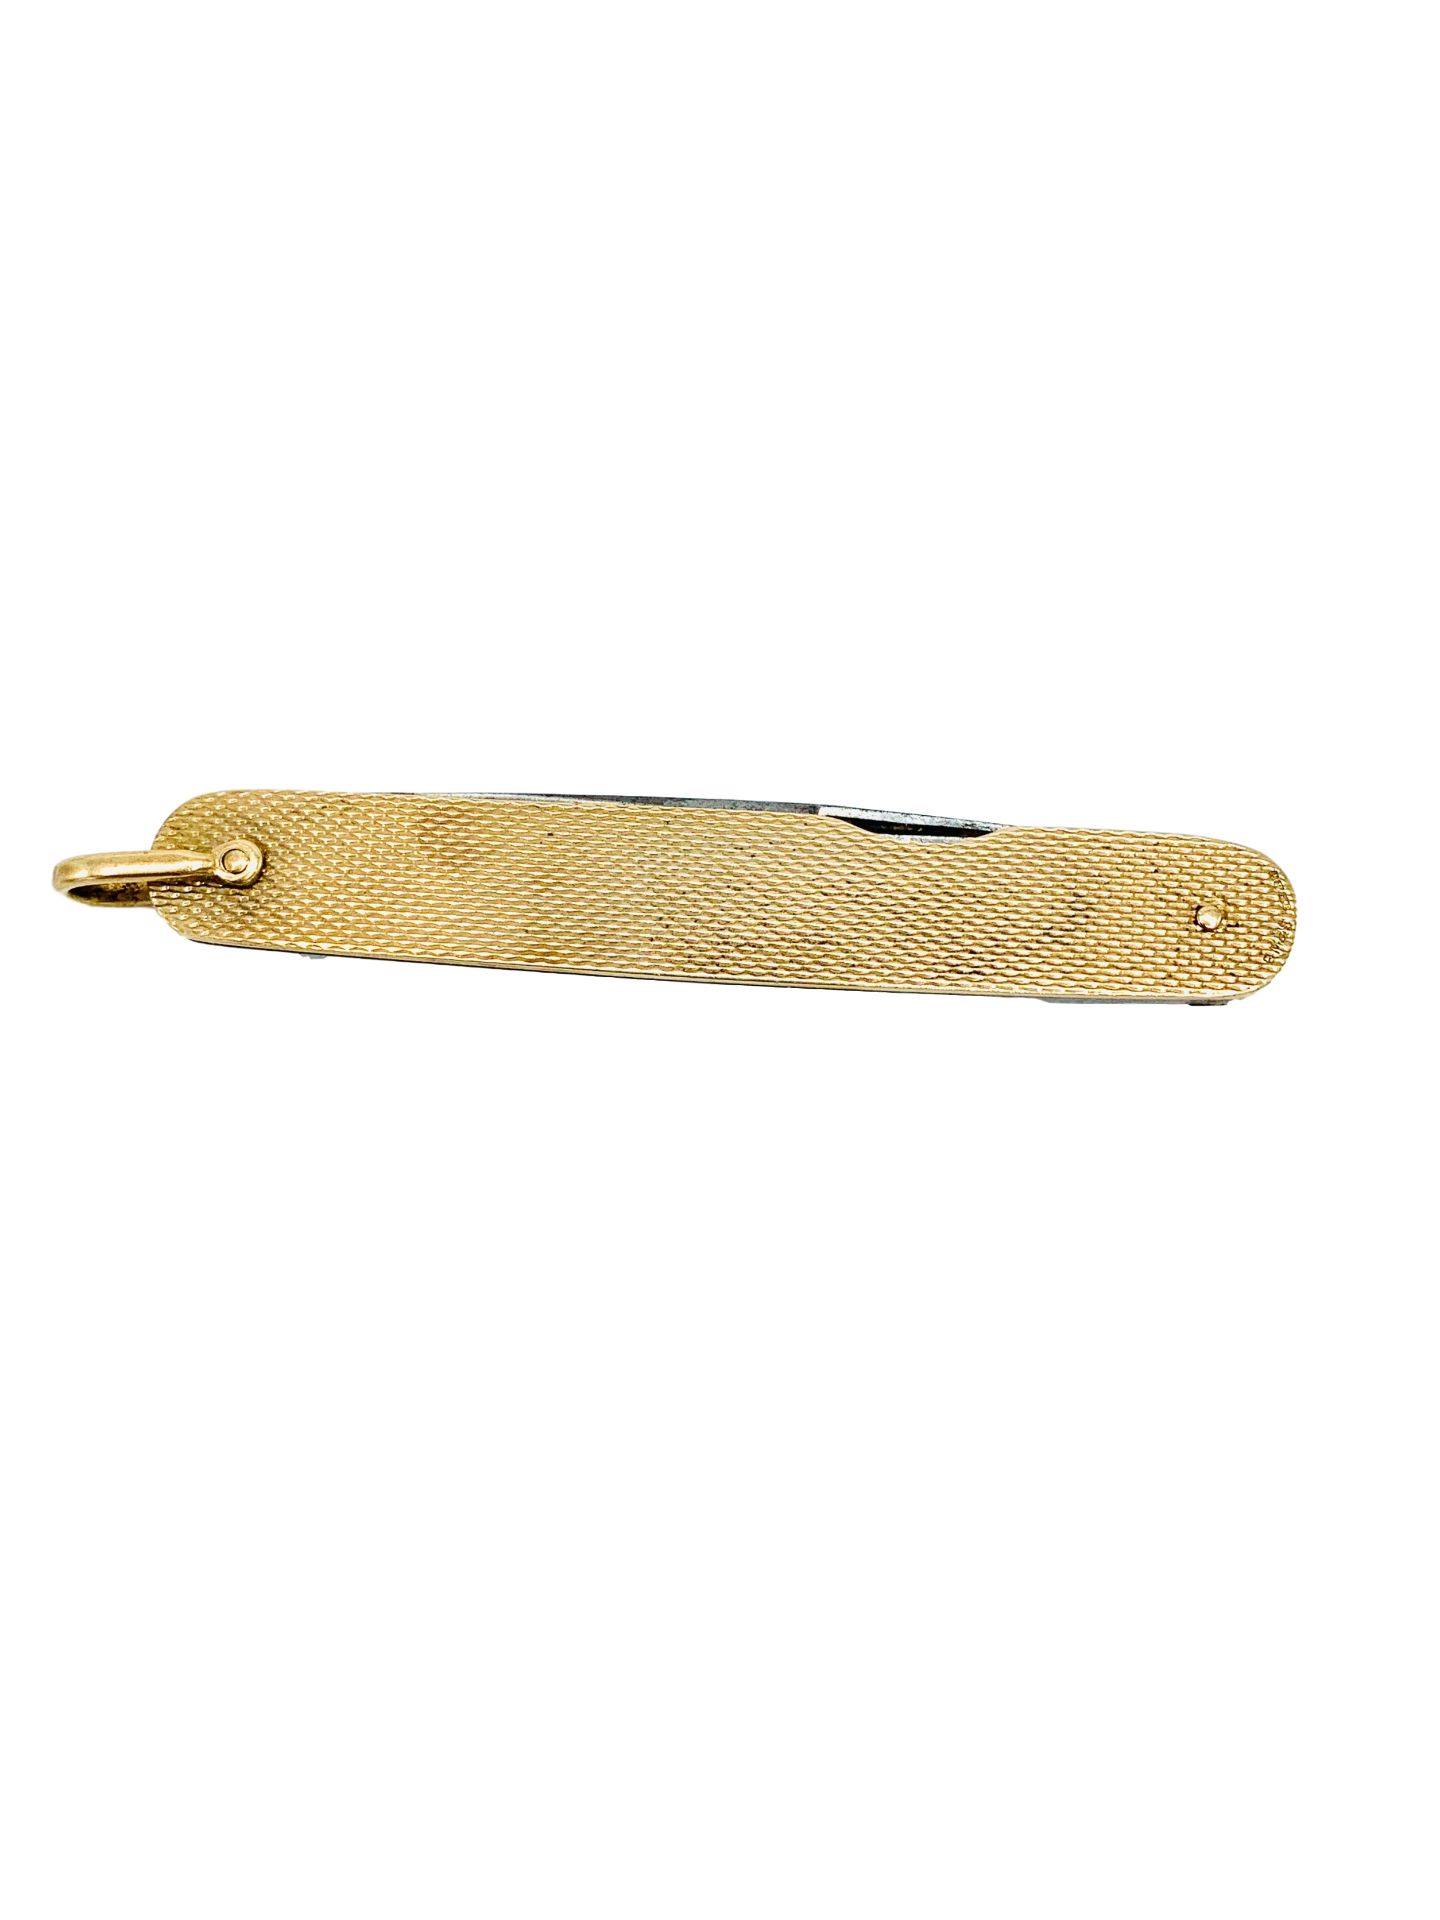 9ct gold machine turned case pocket knife by Asprey.